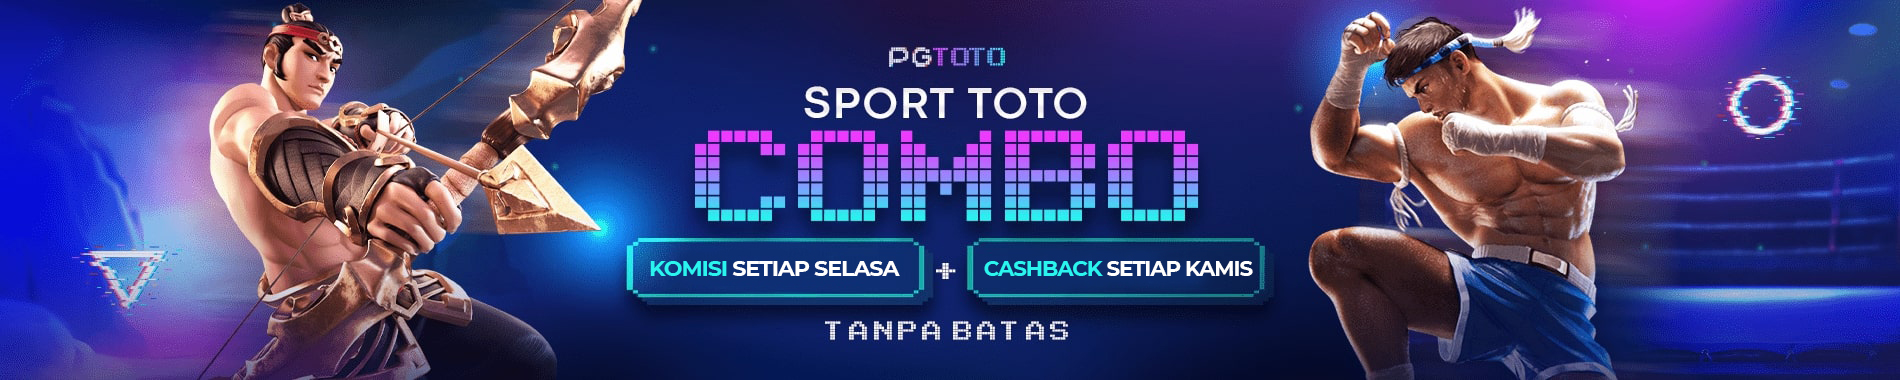 PGTOTO - Promo Sportsbook Cashback 